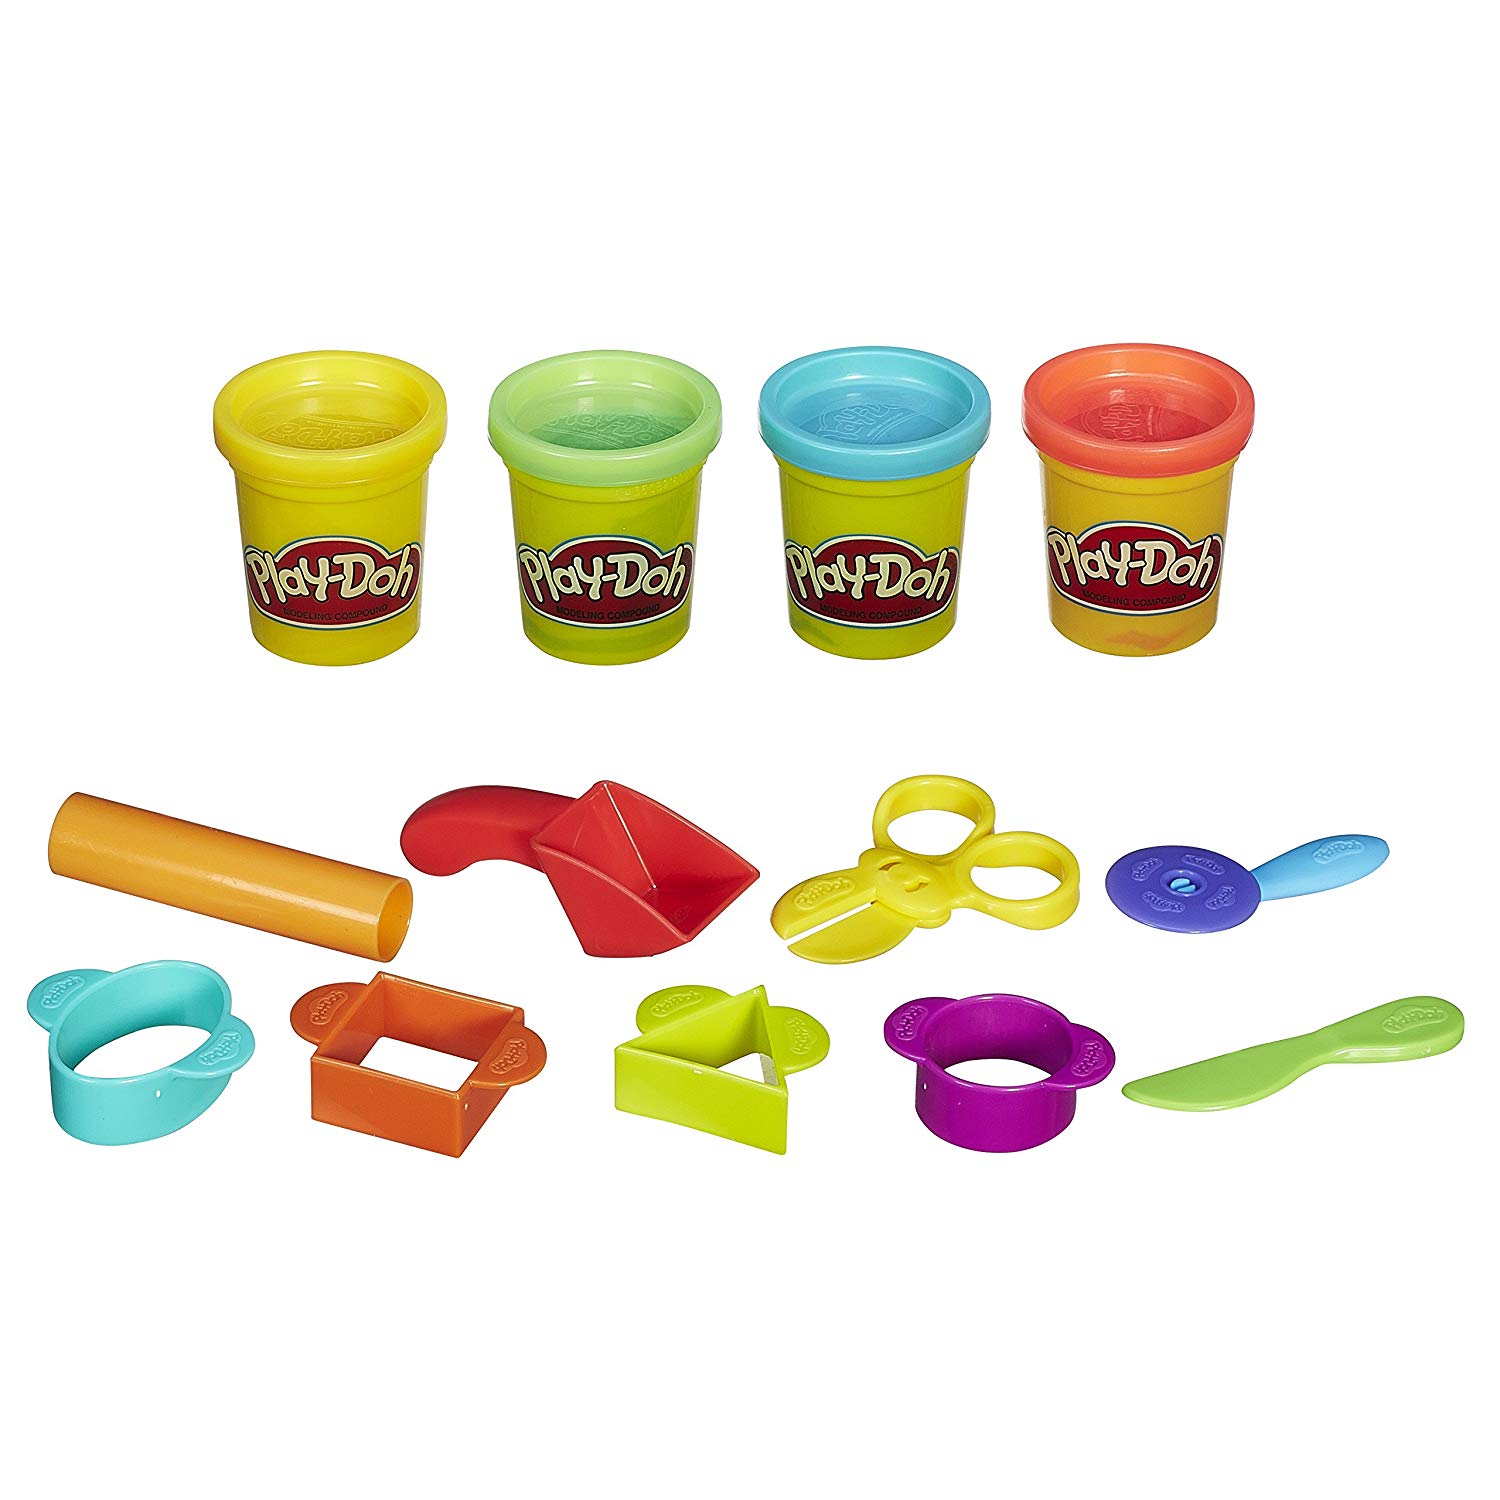 Пластилин оборудование. Playdo пластилин набор. Пластилин Хасбро. Play-Doh Hasbro набор базовый. Пластилин "Play-Doh зубной врач".